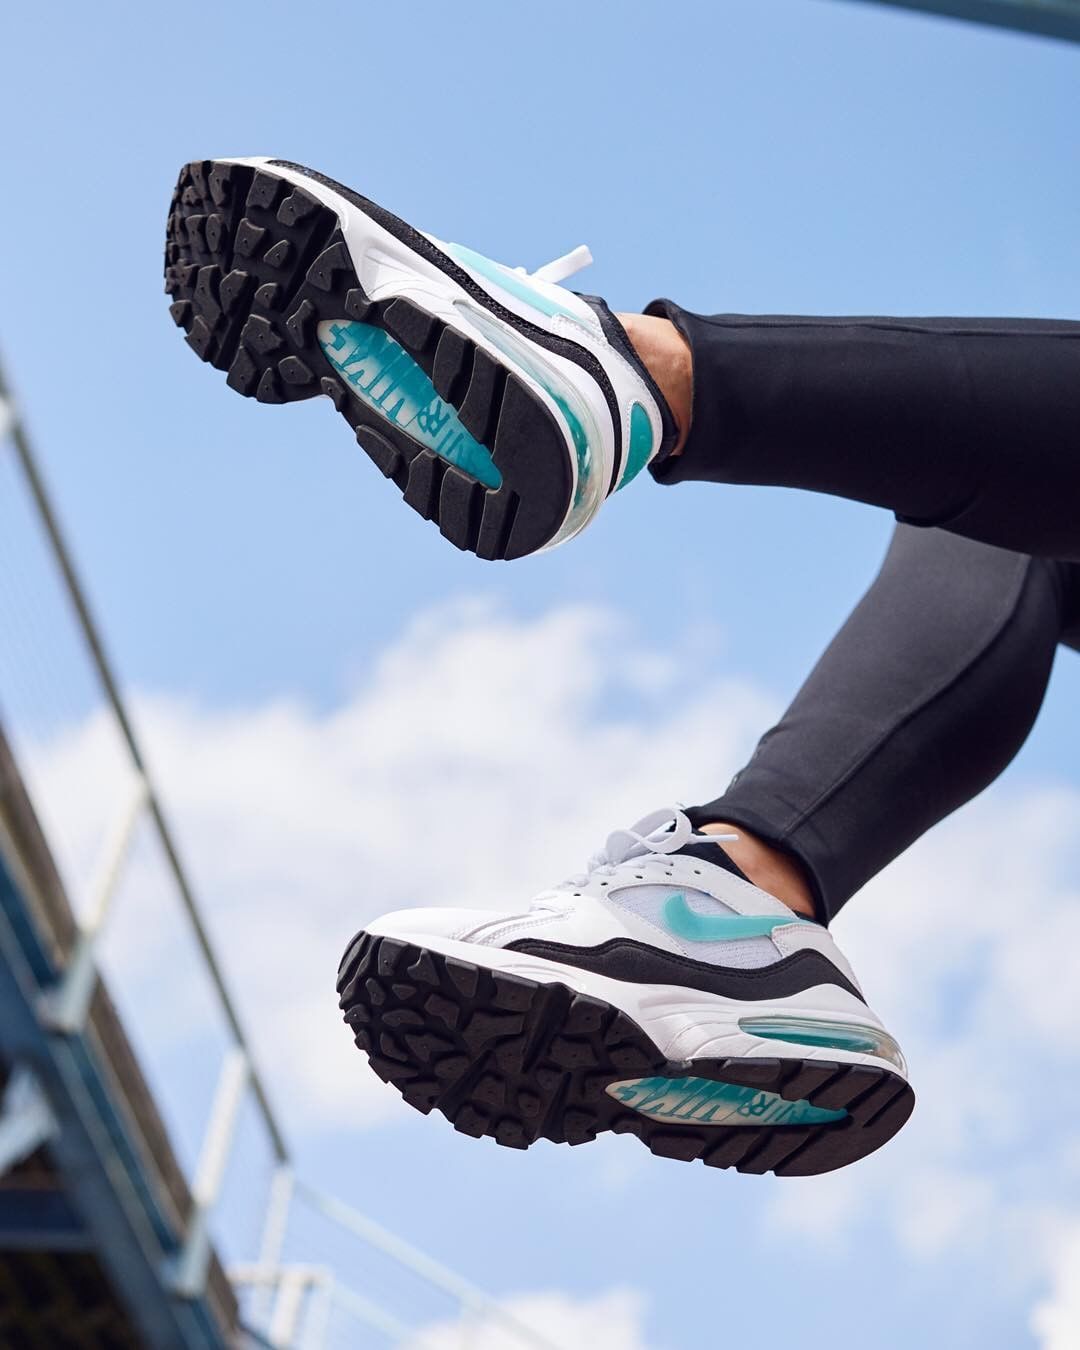 Nike Air Max 93
White / Sport Turquoise